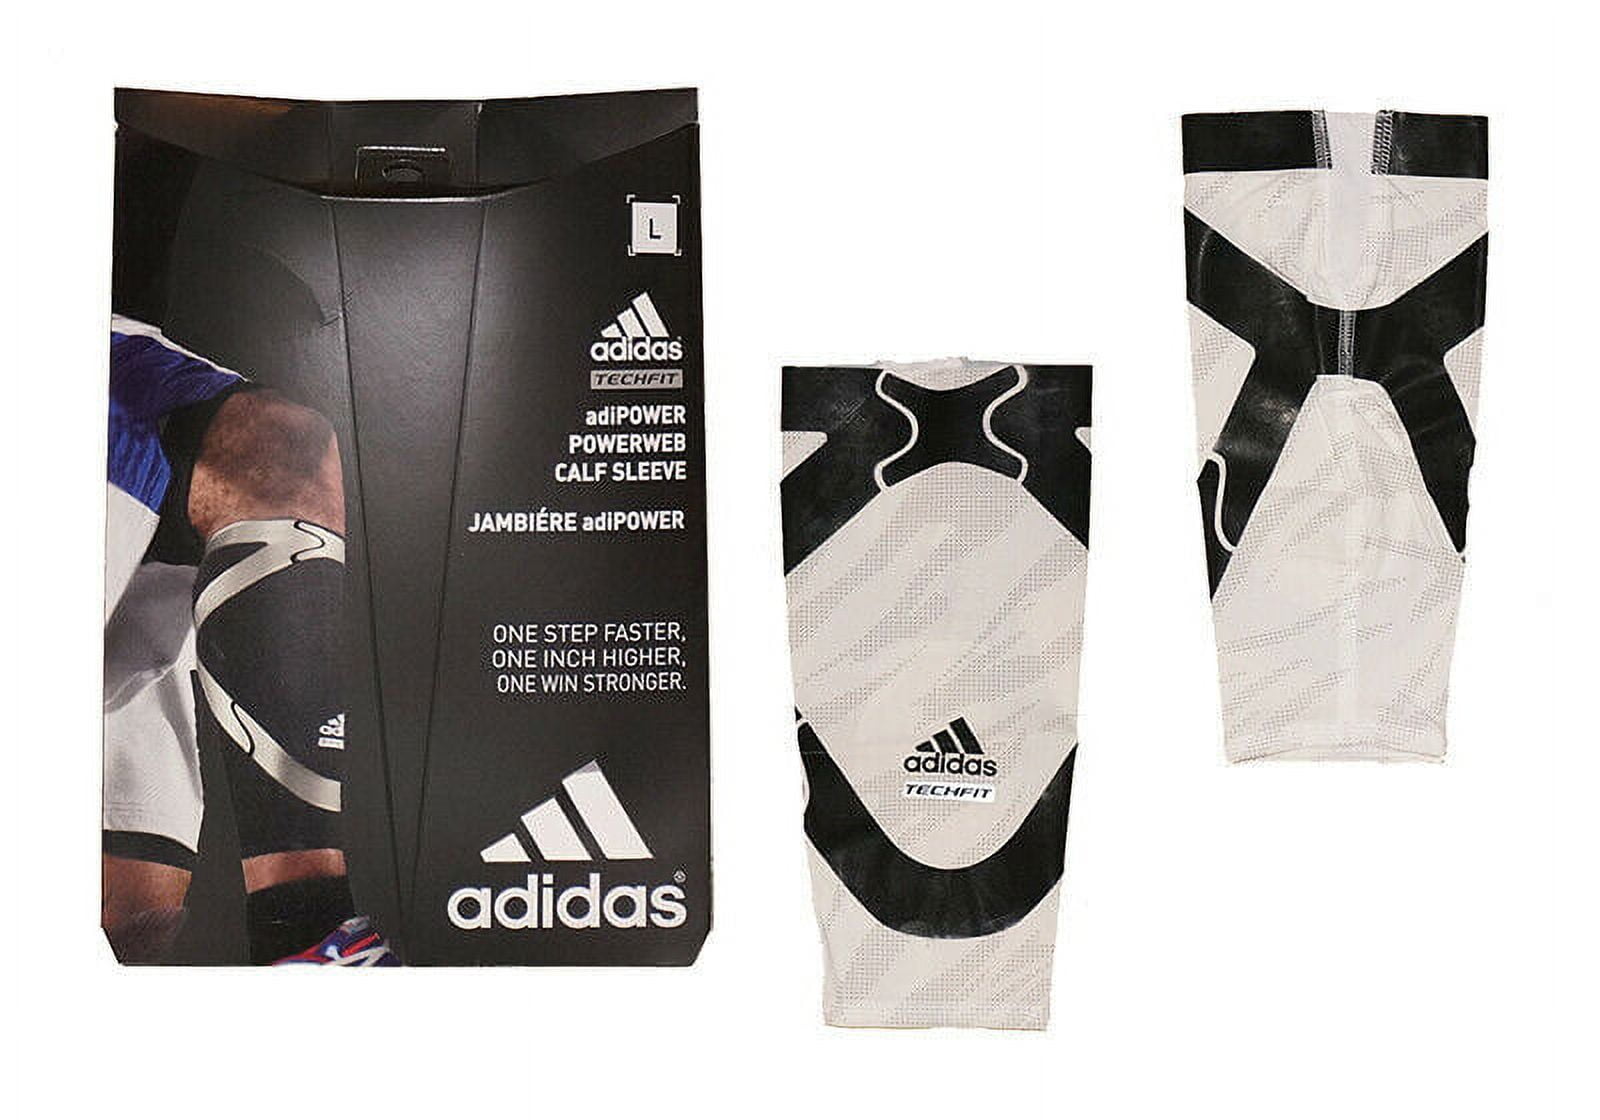 Adidas Techfit Men's Basketball Jambiere adiPOWER Powerweb Compression Calf  Sleeve - White/Black 